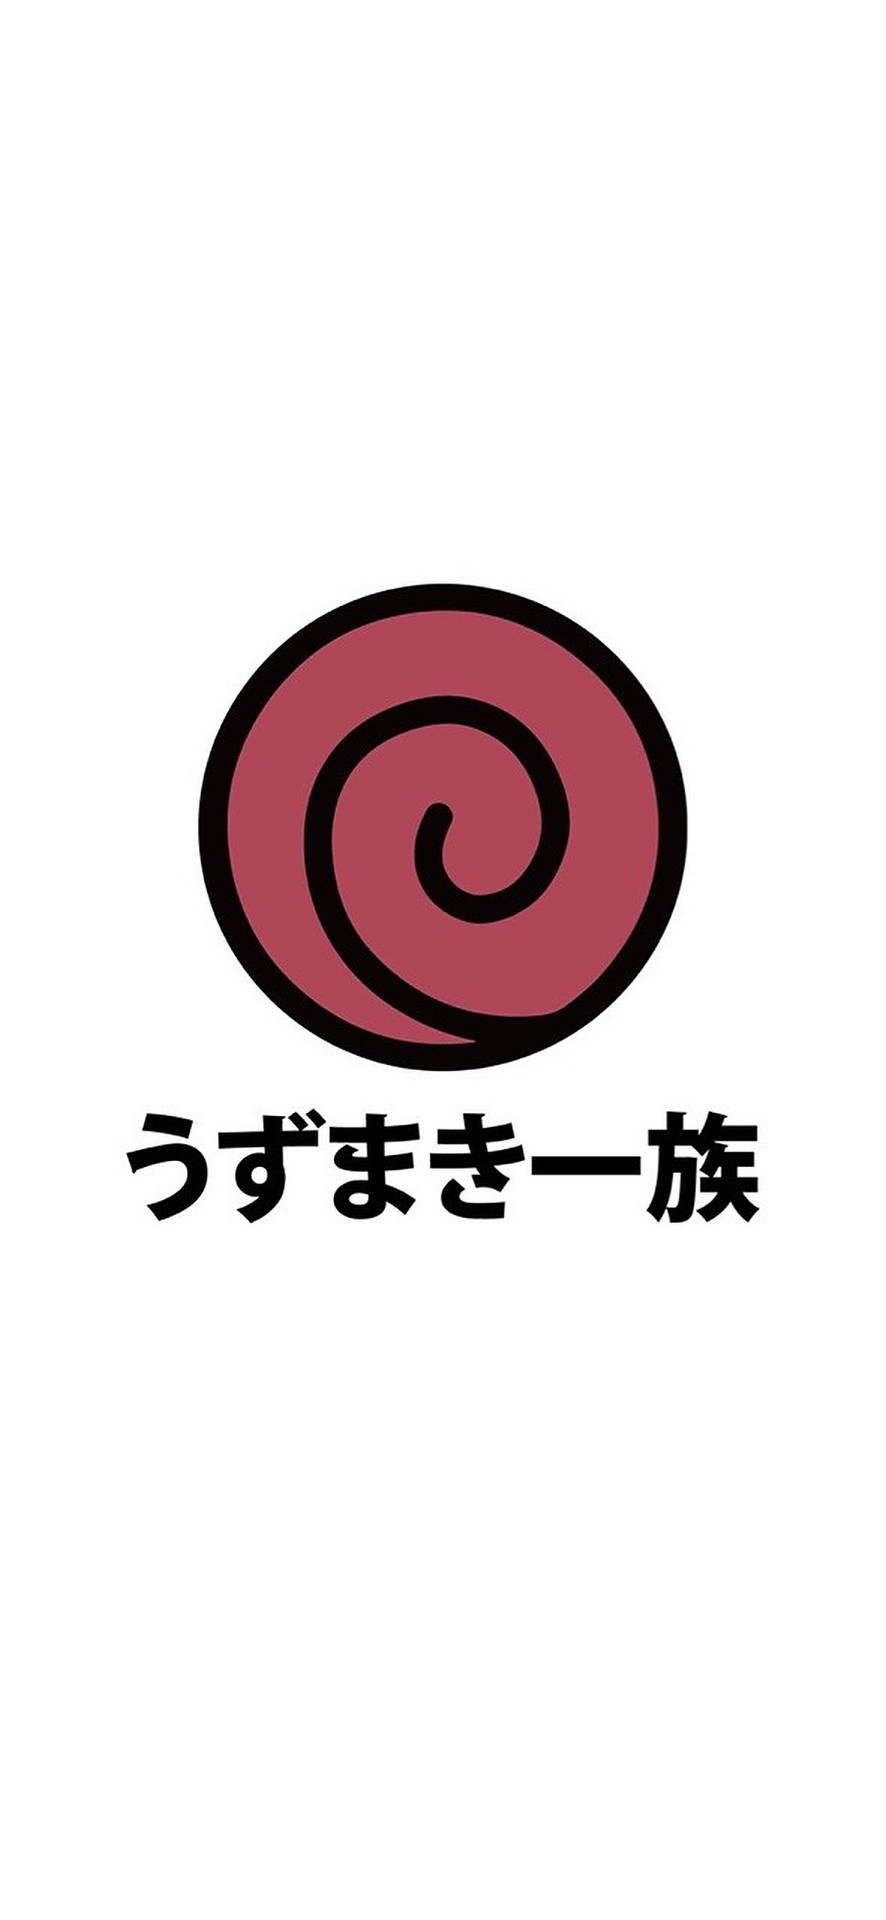 Logodel Clan Uzumaki En Color Rojo Fondo de pantalla